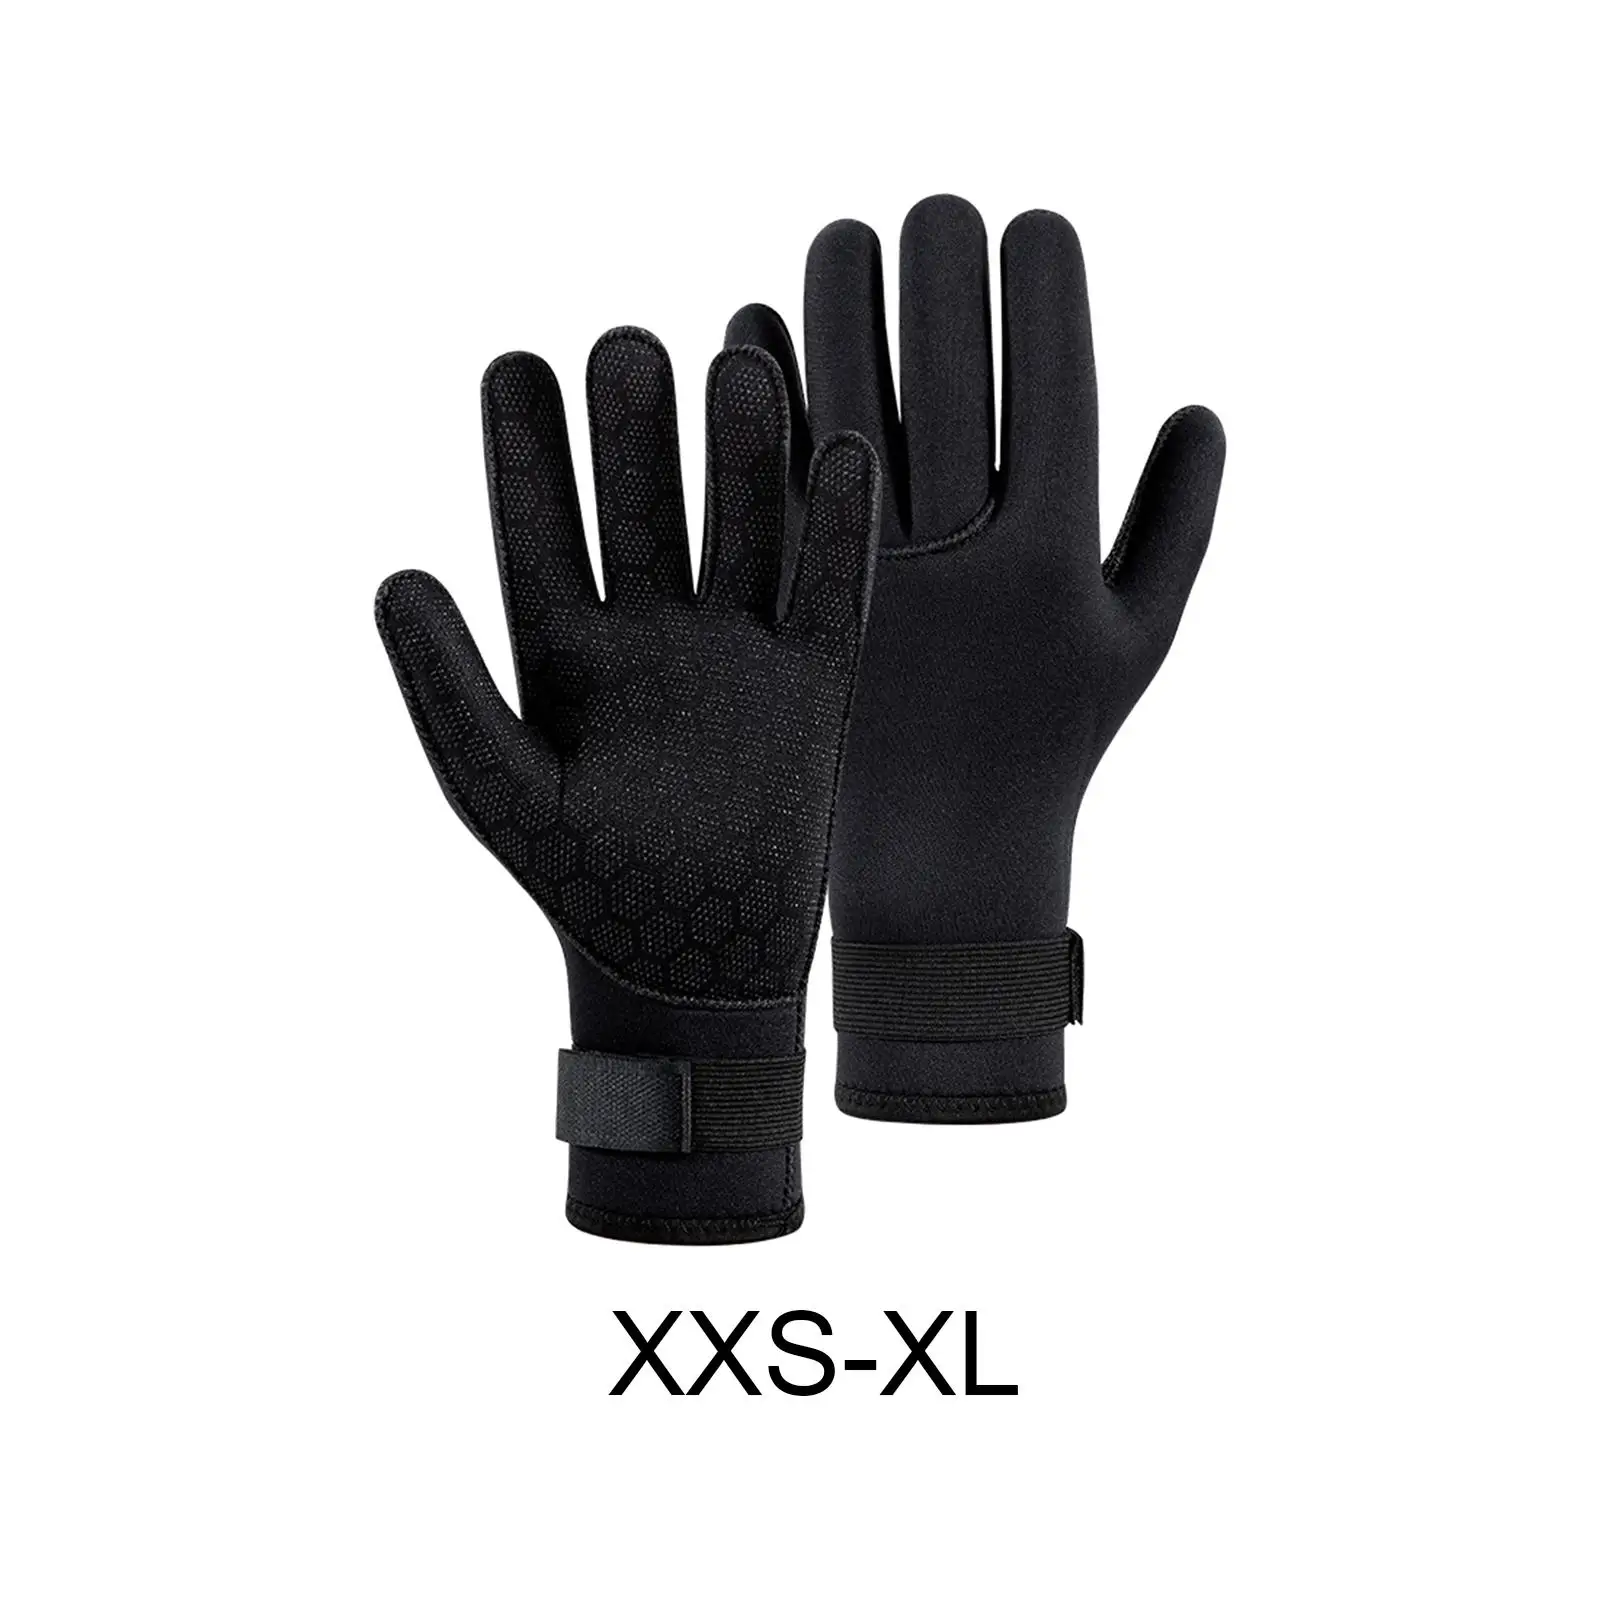 Diving Gloves Neoprene Gloves Wetsuit Gloves with Adjustable Strap Comfortable